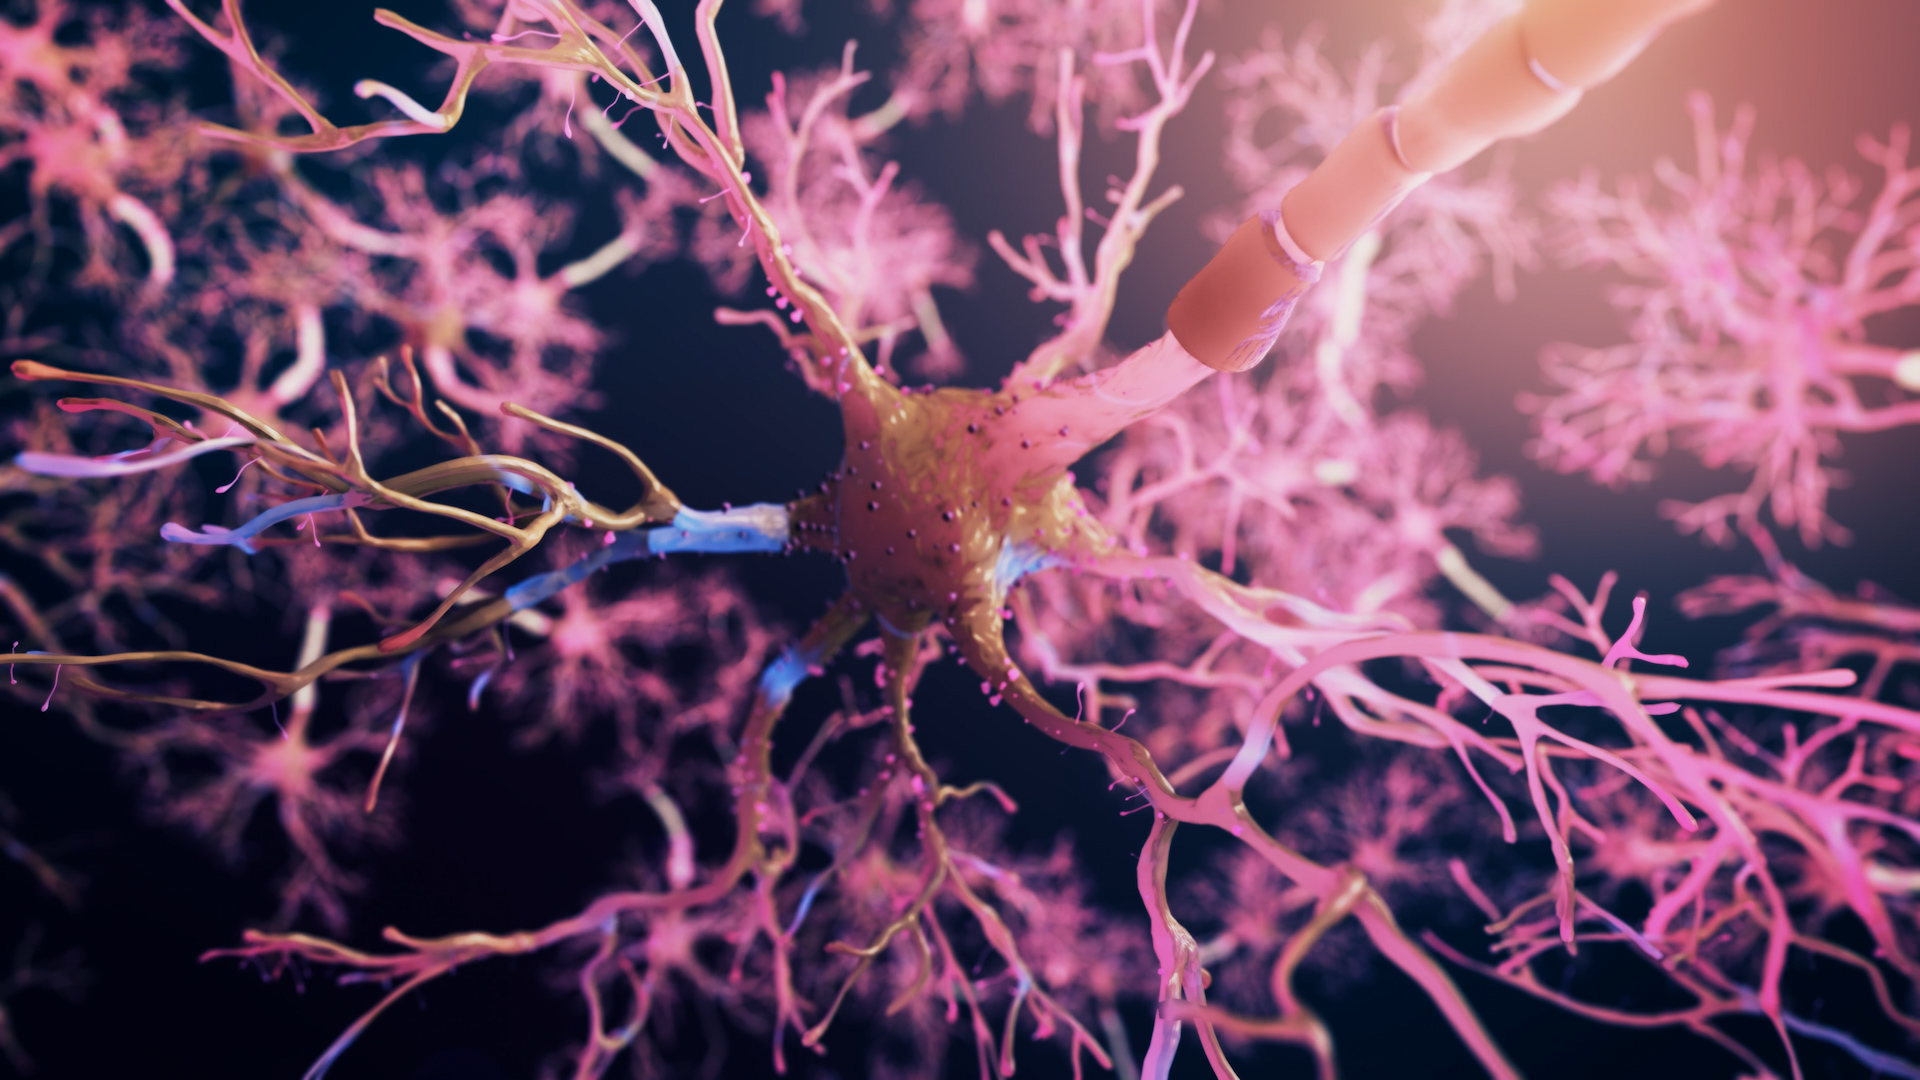 Real Neuron synapse network 3D animation. Flight through brain nervous  system.